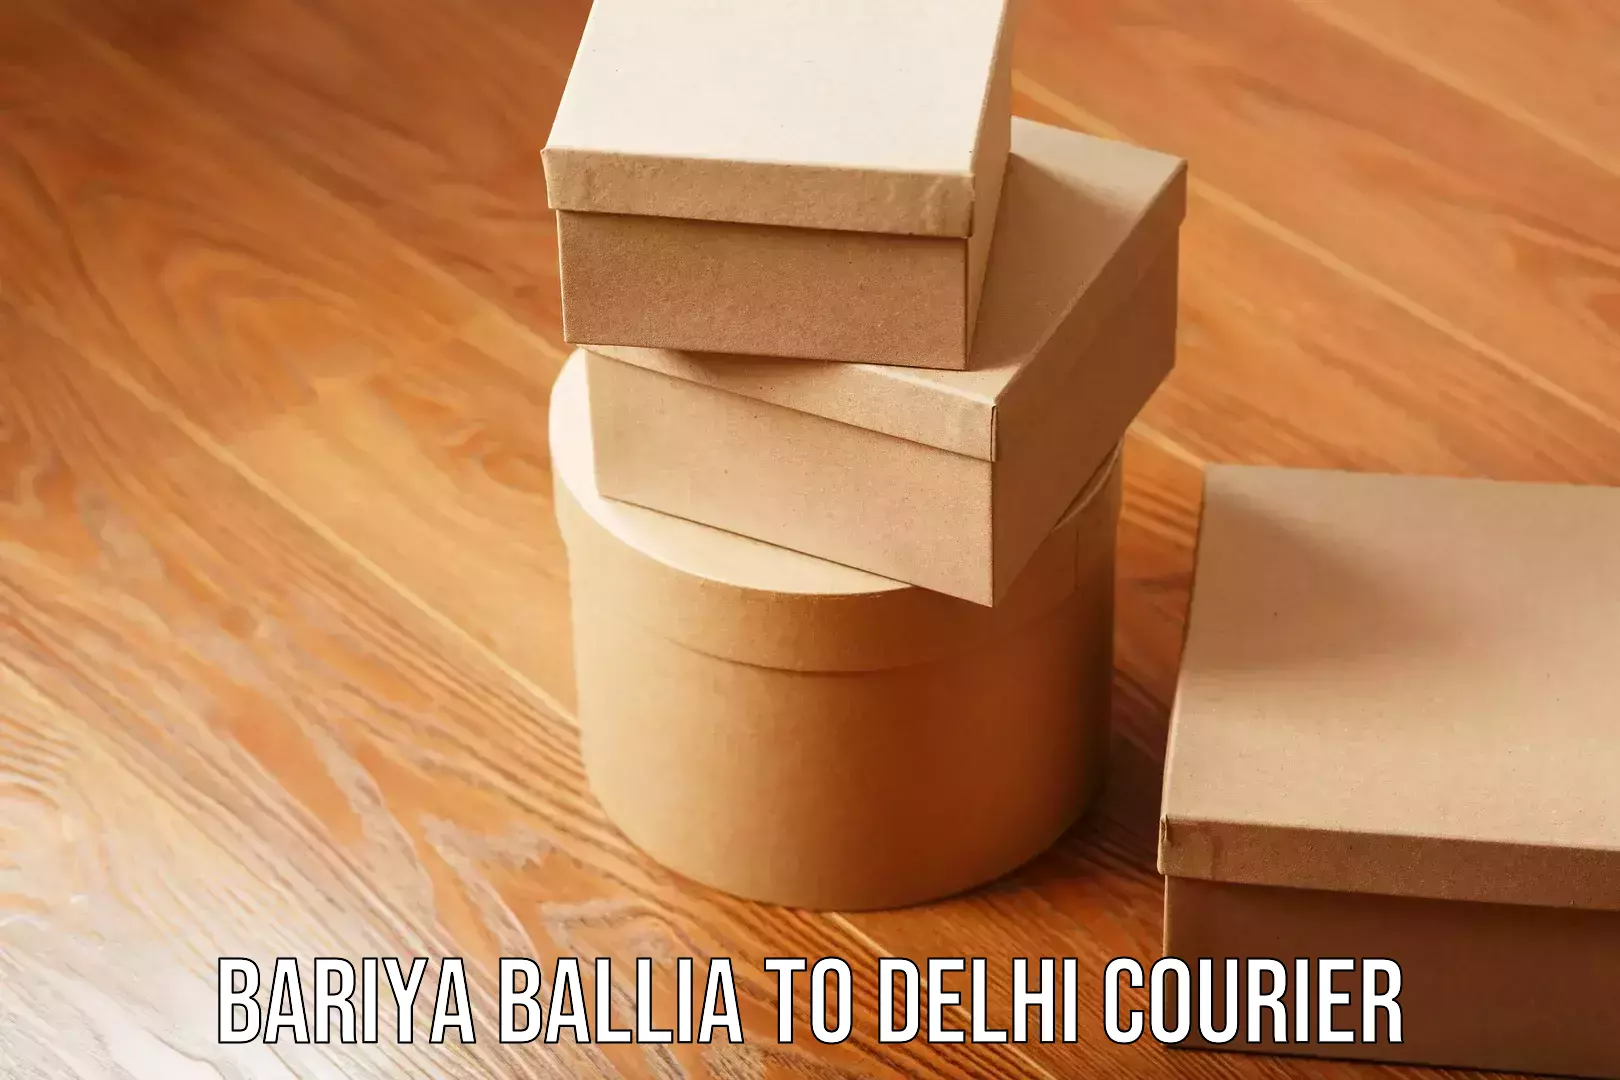 Express mail service Bariya Ballia to University of Delhi